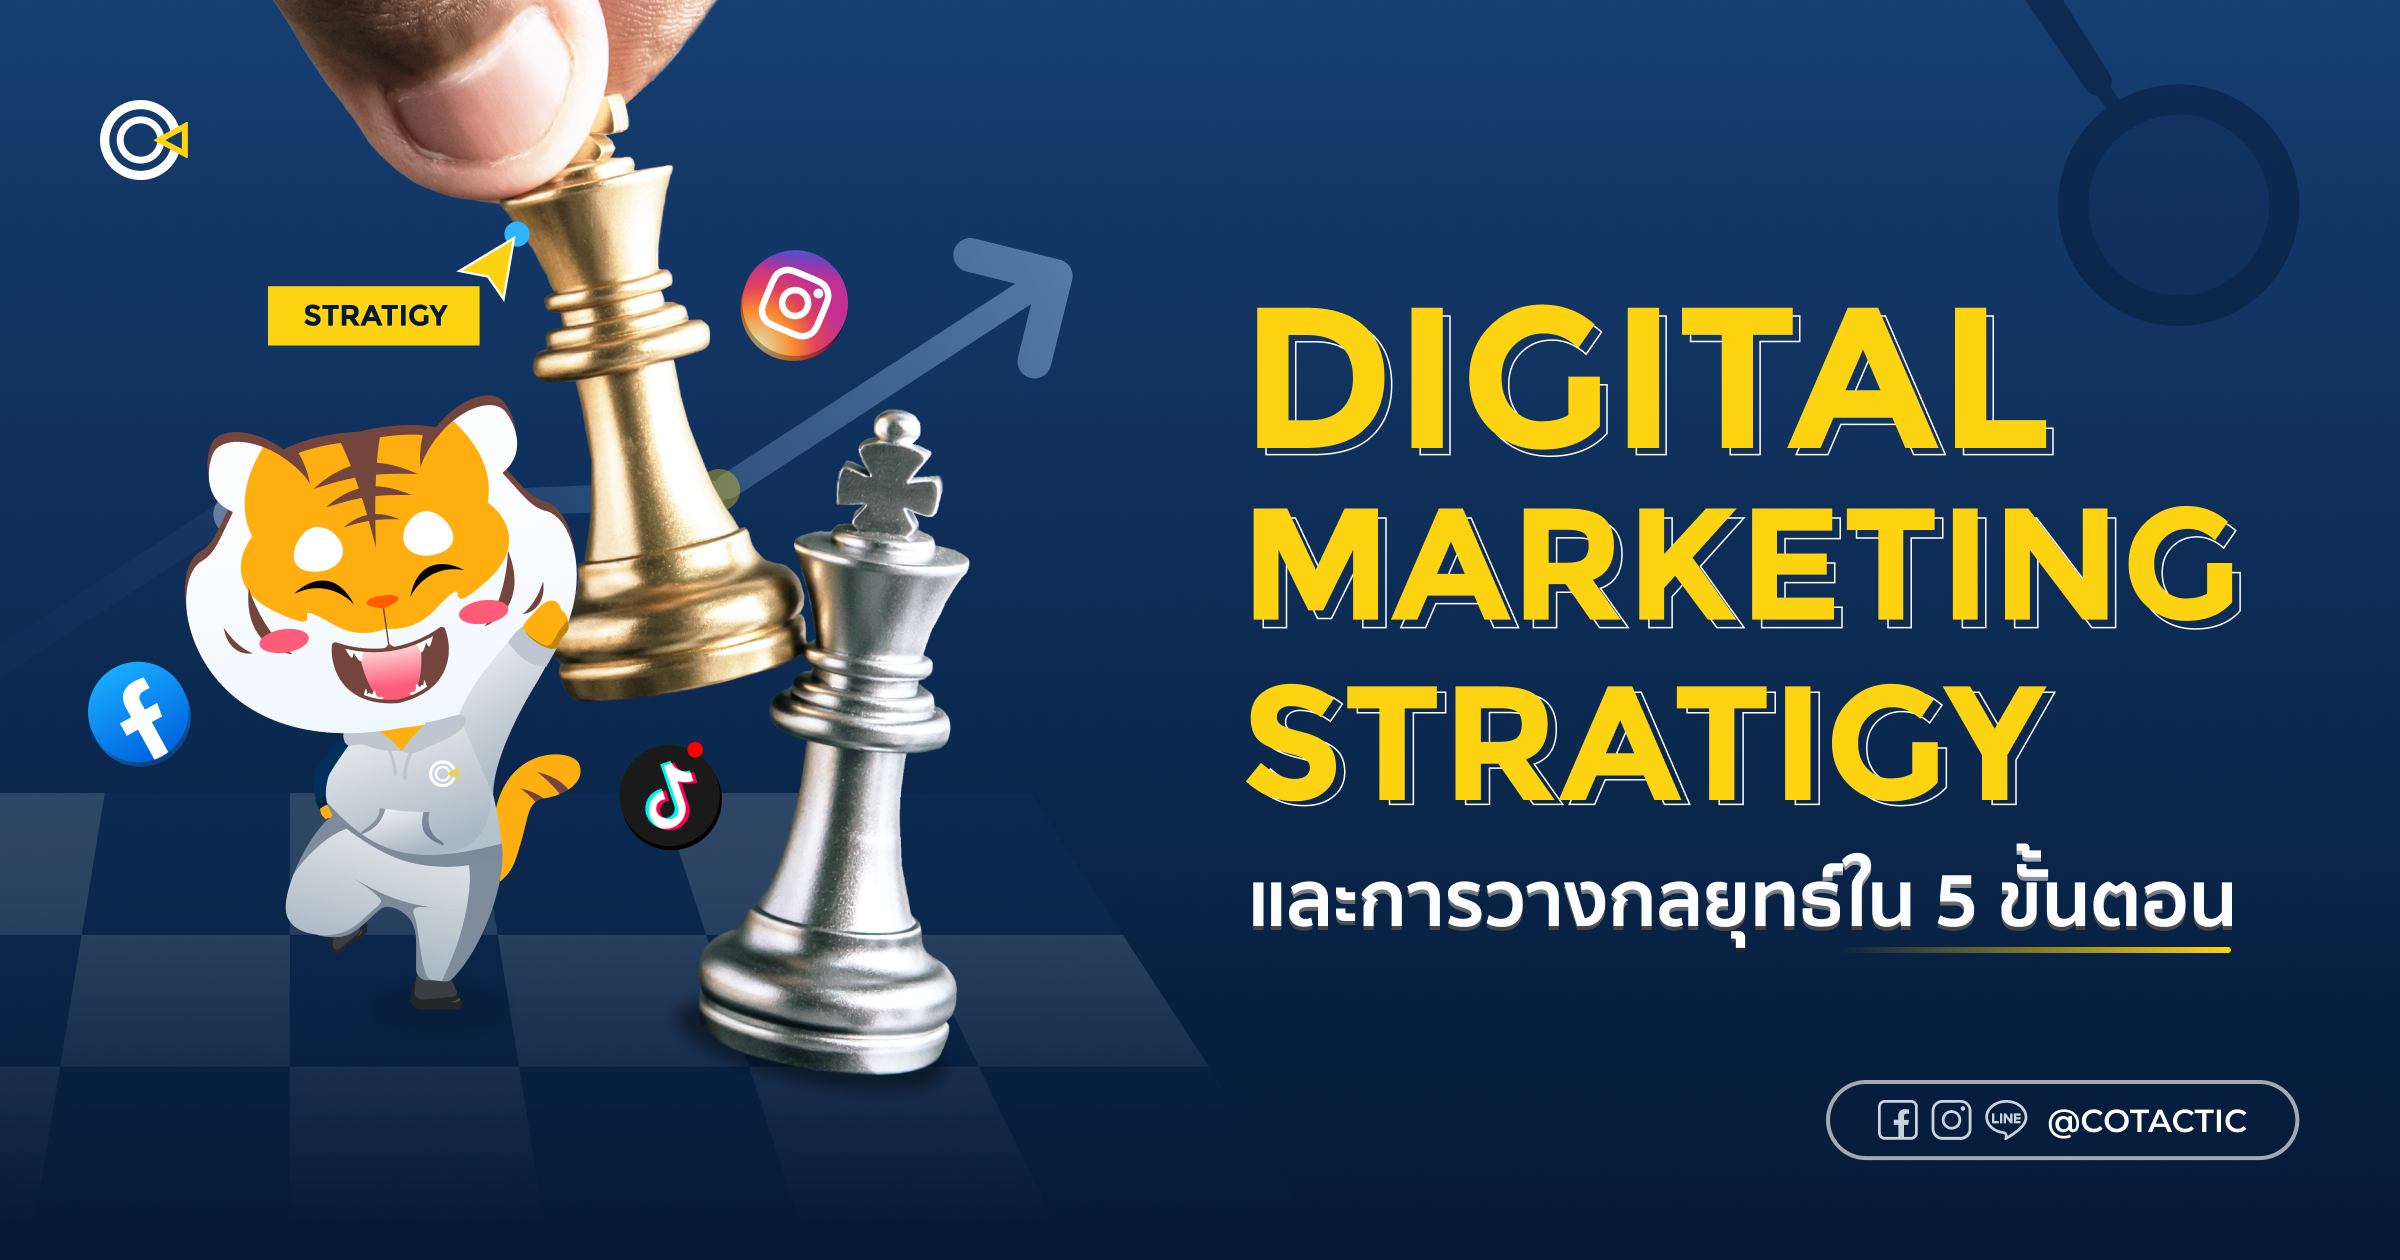 Digital Marketing Strategy คือ